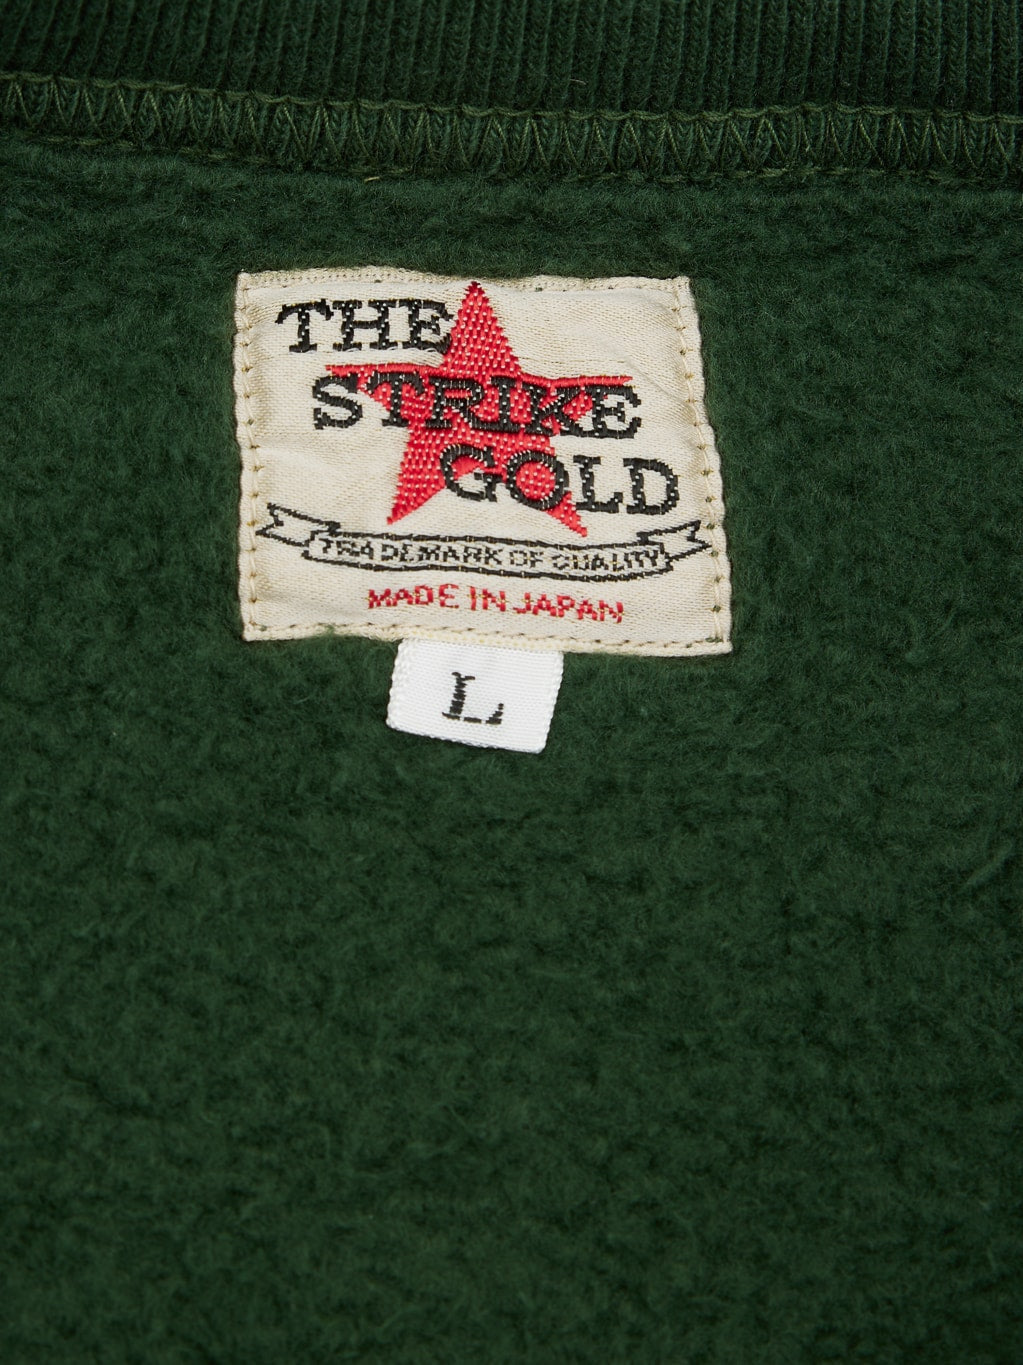 The Strike Gold Loopwheeled Sweatshirt Green interior label